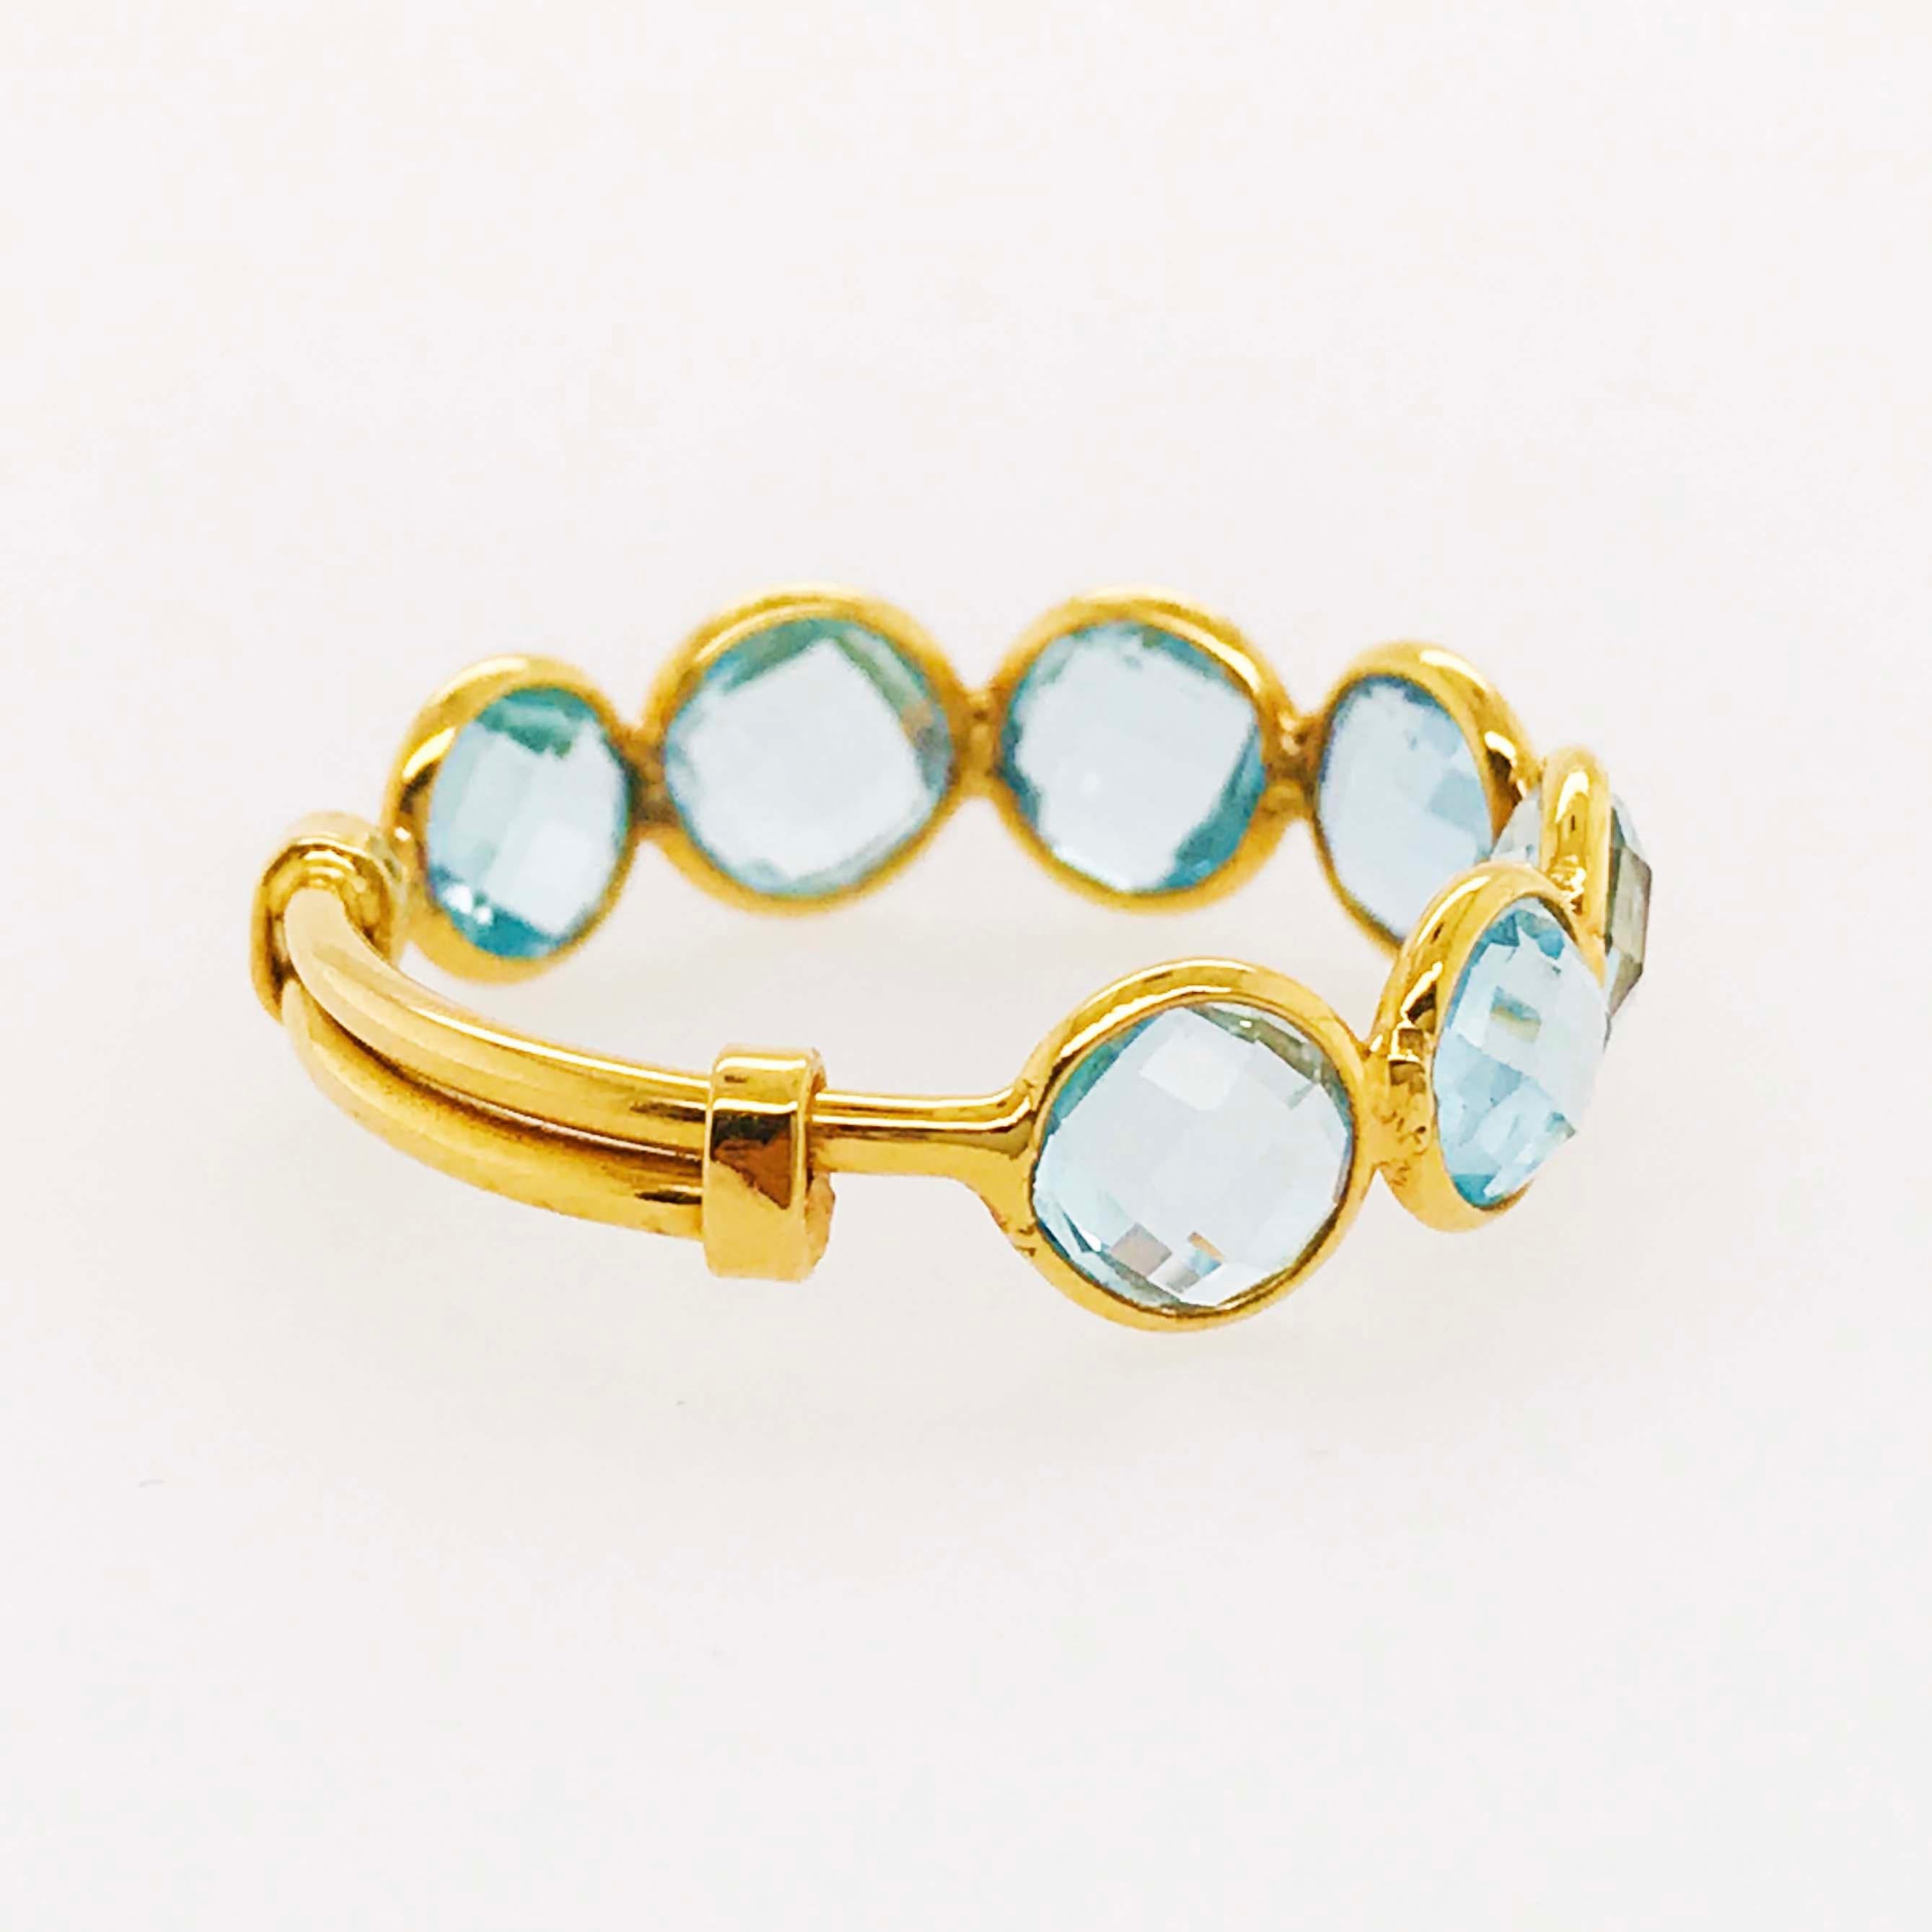 Women's Blue Topaz Ring, Adjustable Ring in 18 Karat Gold 4 Carat Blue Topaz Gemstone